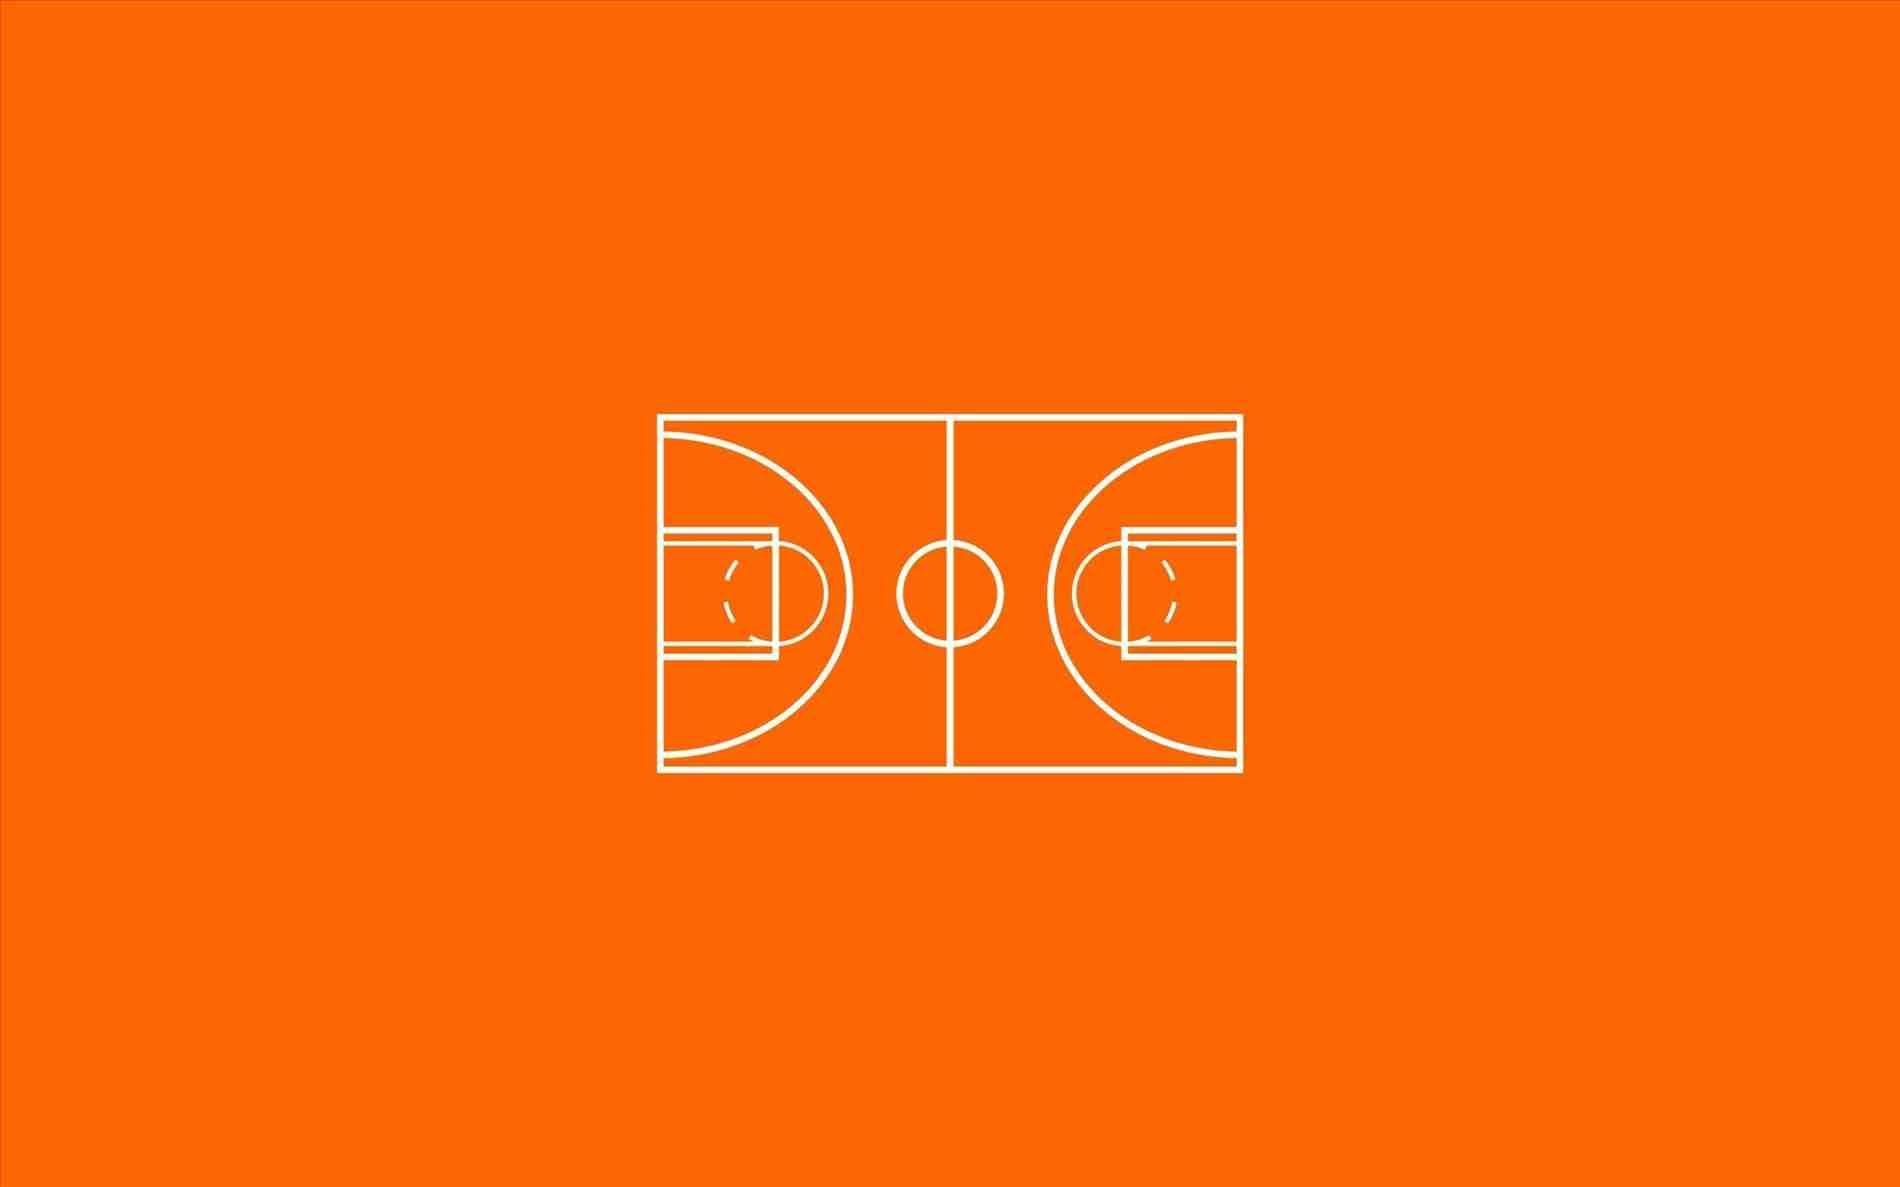 Orange Nike Iphone Wallpapers